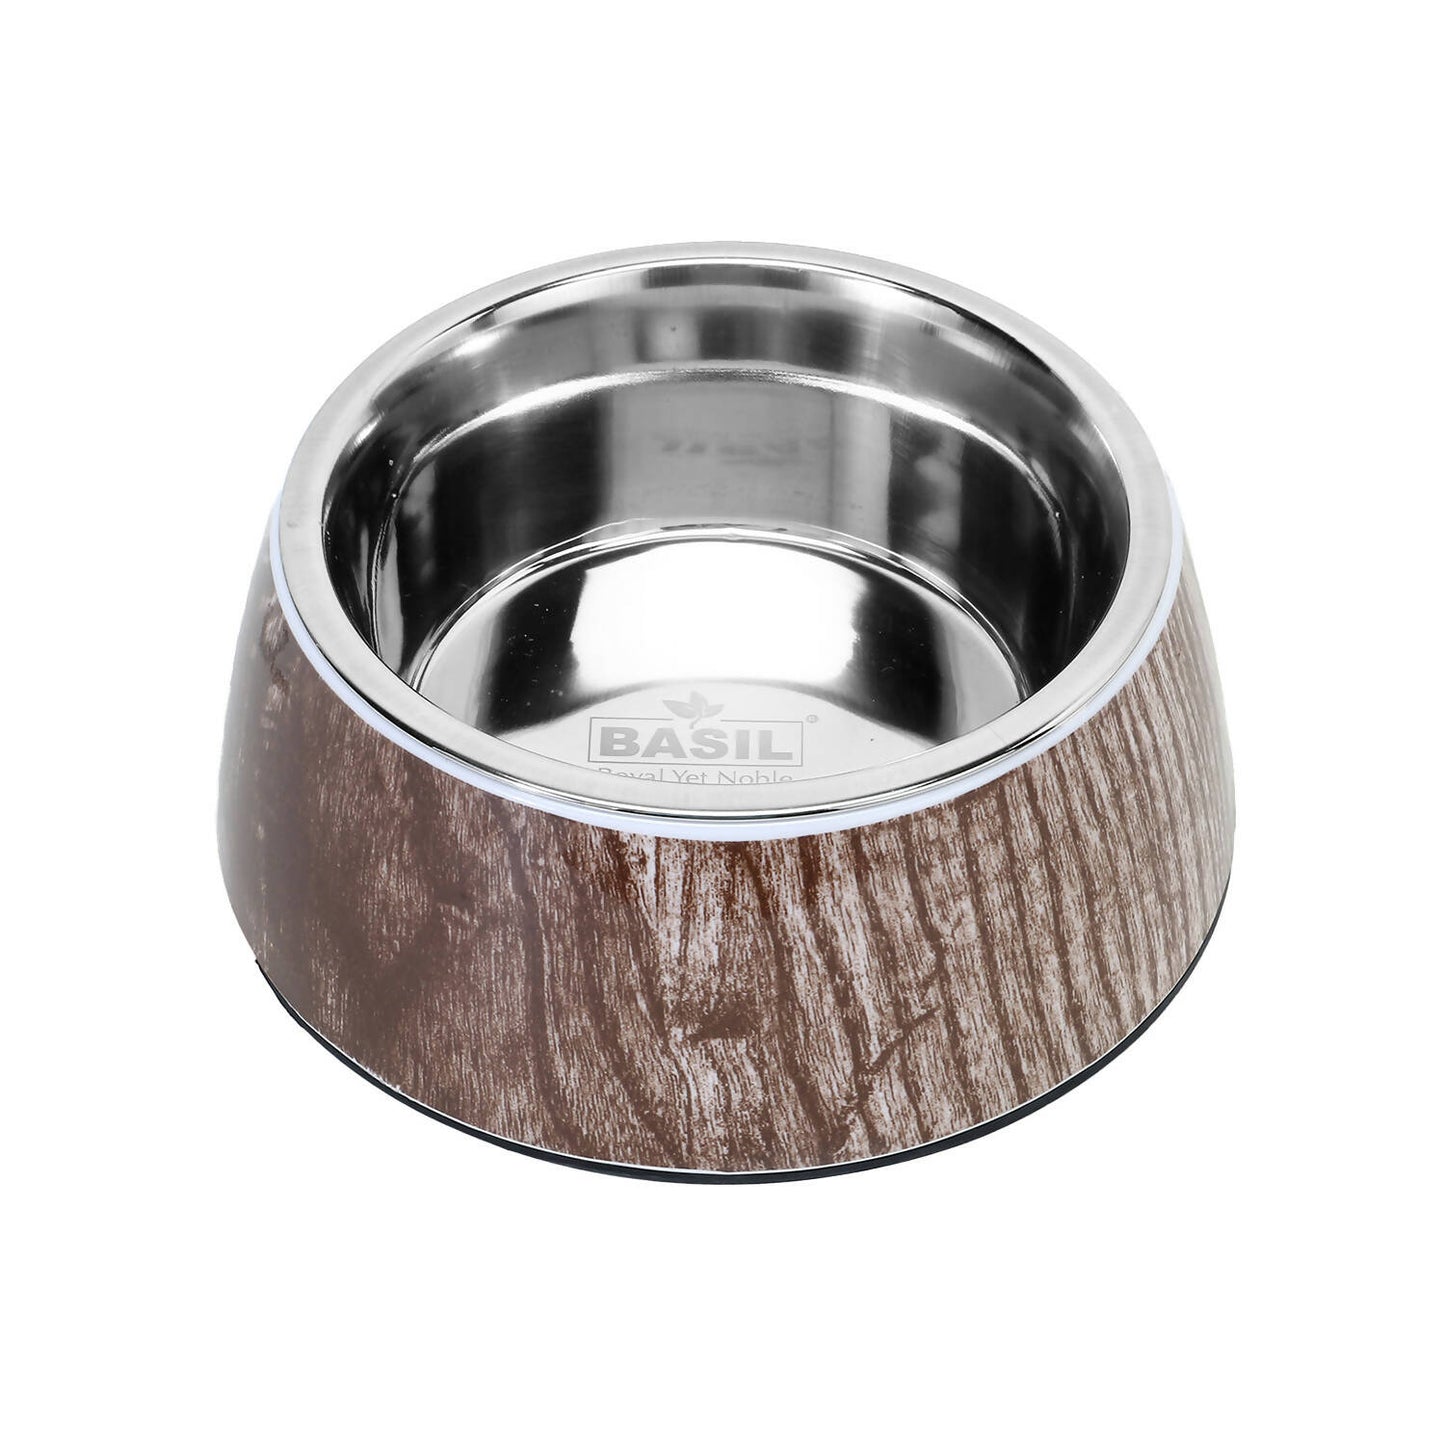 Basil - Melamine Wooden Printed Bowl For Dogs